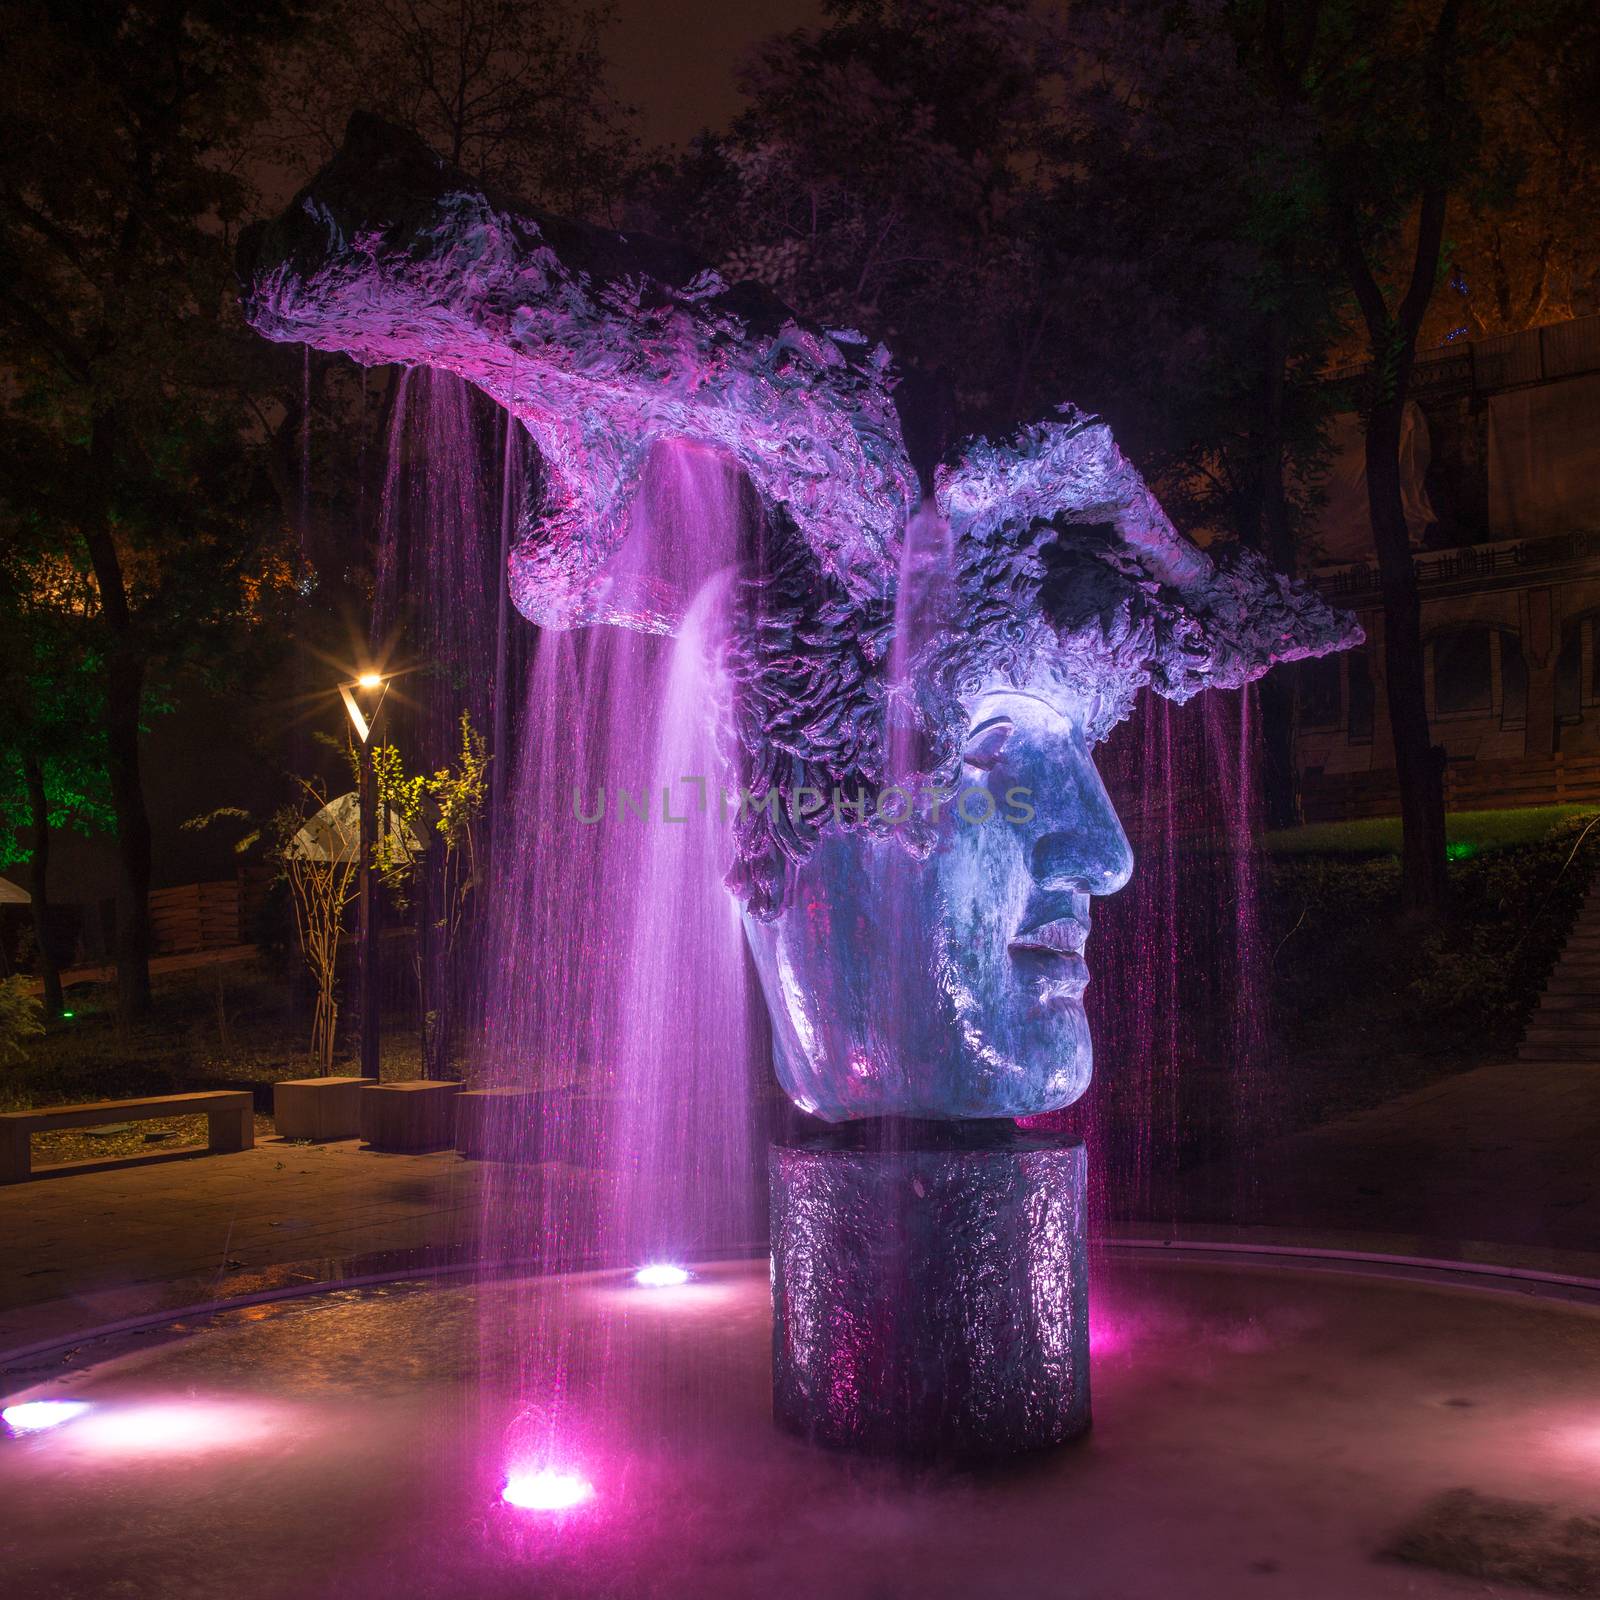 Greek Park in Odessa, Ukraine at night by Multipedia